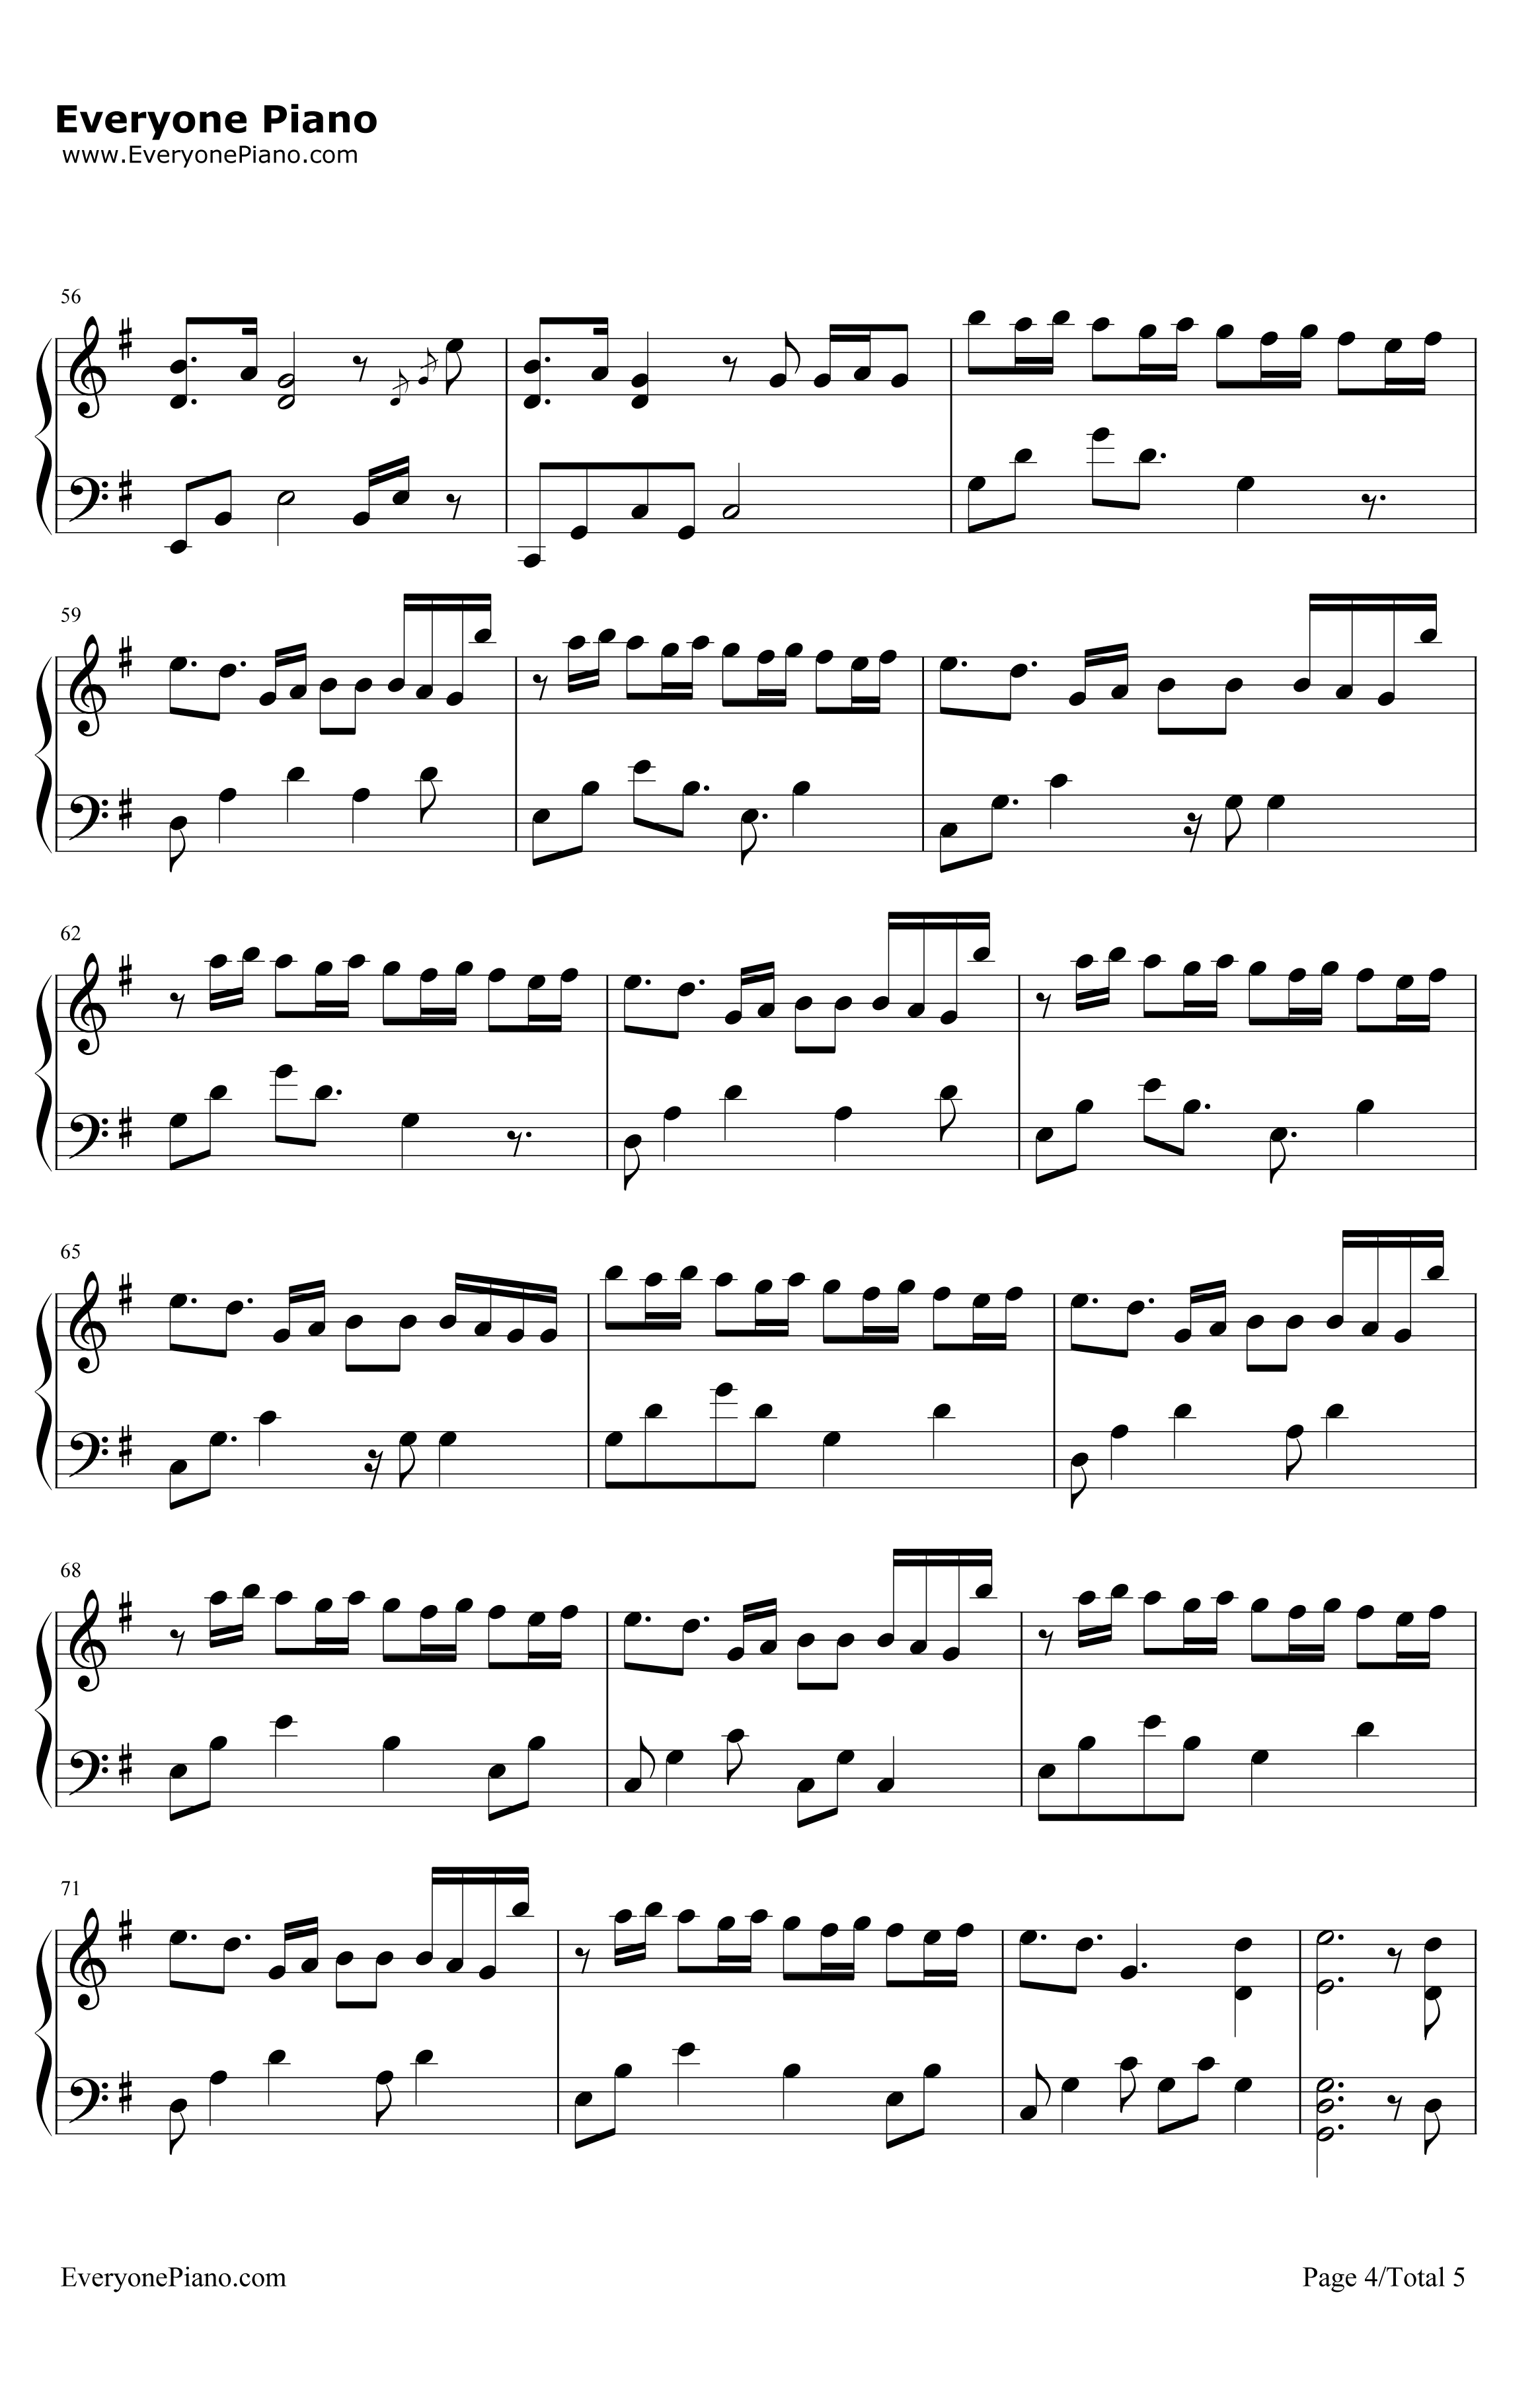 Company钢琴谱-JustinBieber4